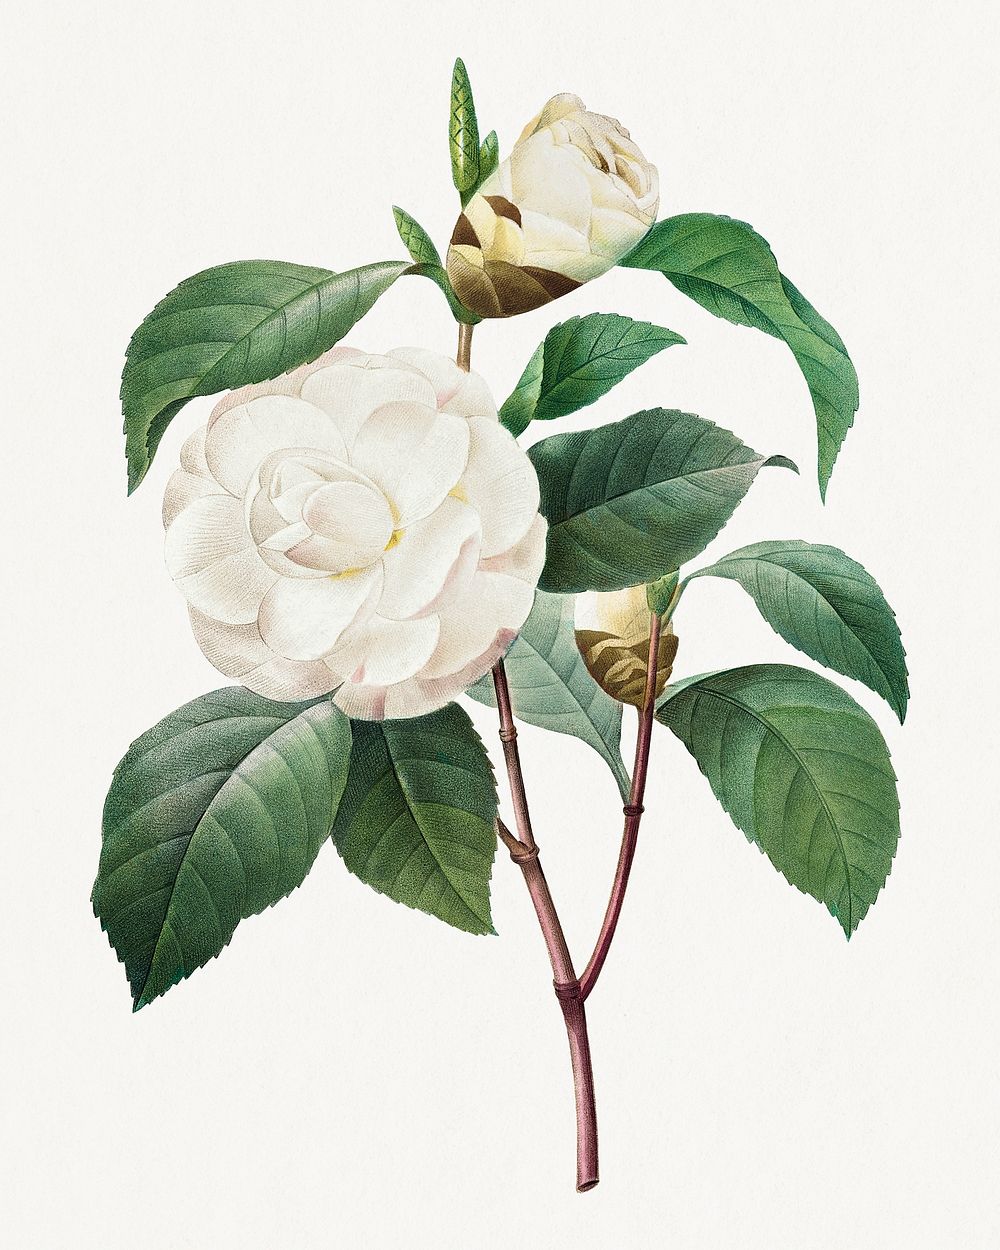 White Camellia from Choix des plus belles fleurs (1827) by Pierre-Joseph Redout&eacute;. Original from Biodiversity Heritage…